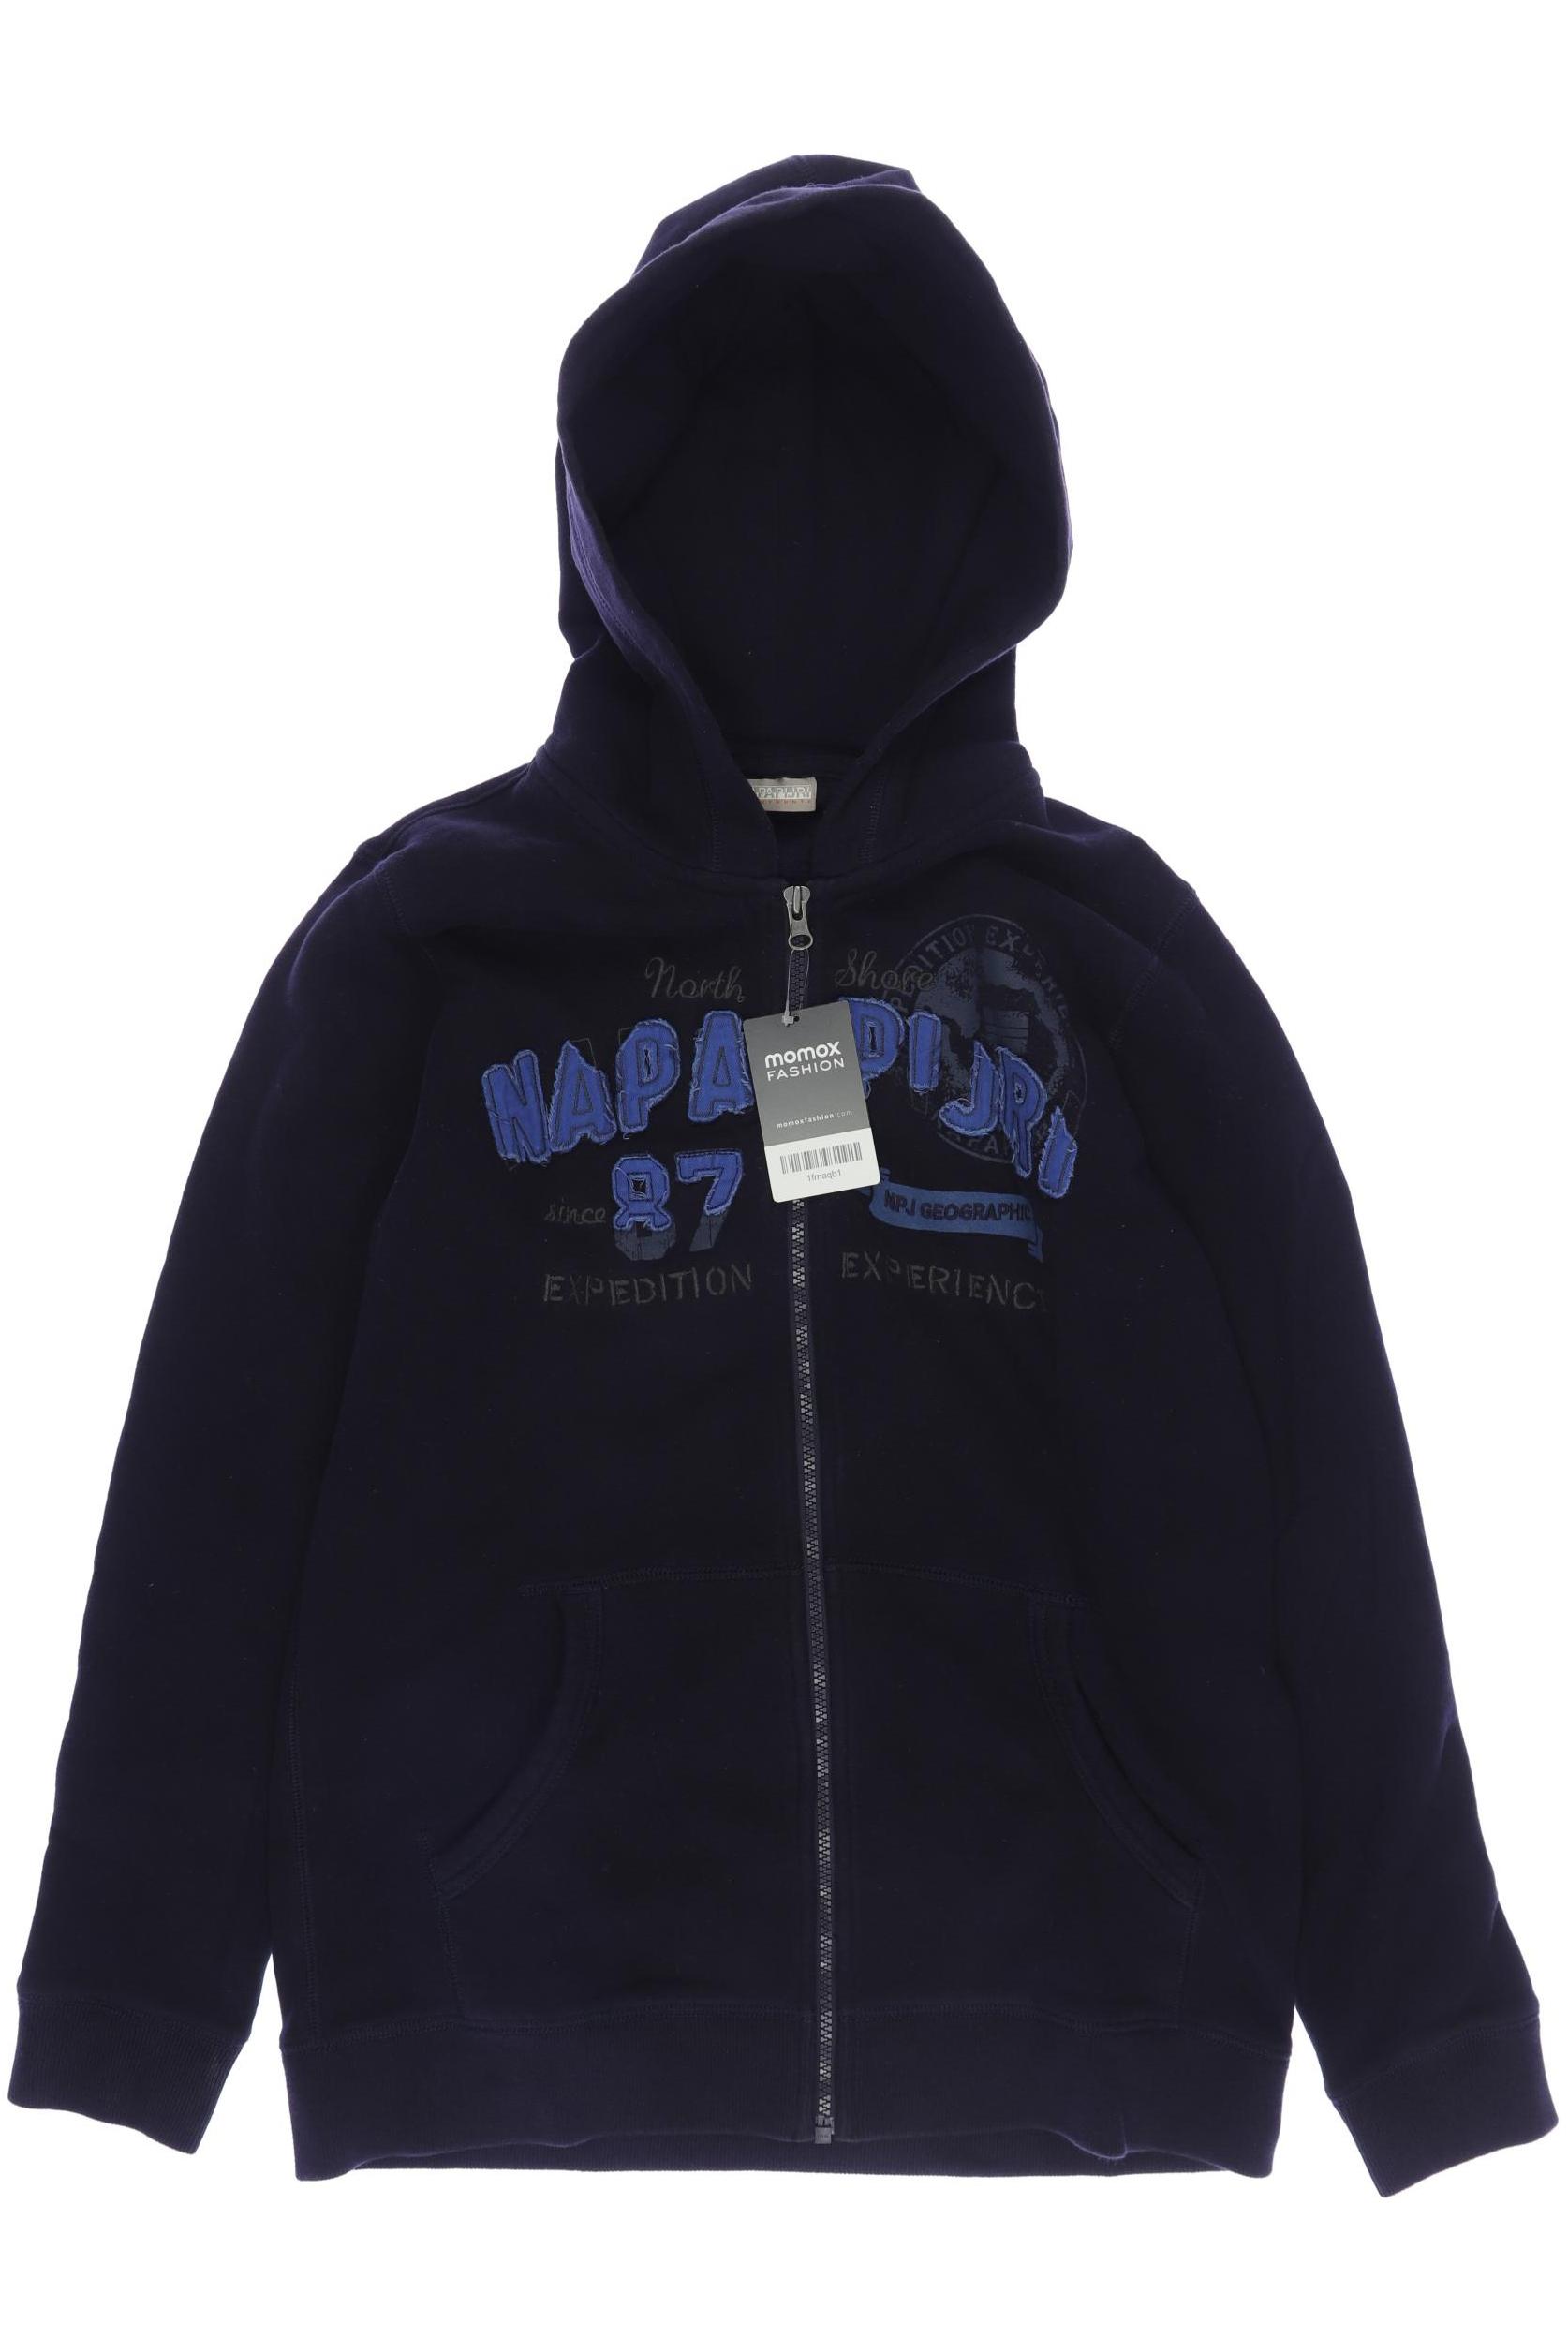 Napapijri Jungen Hoodies & Sweater, marineblau von Napapijri